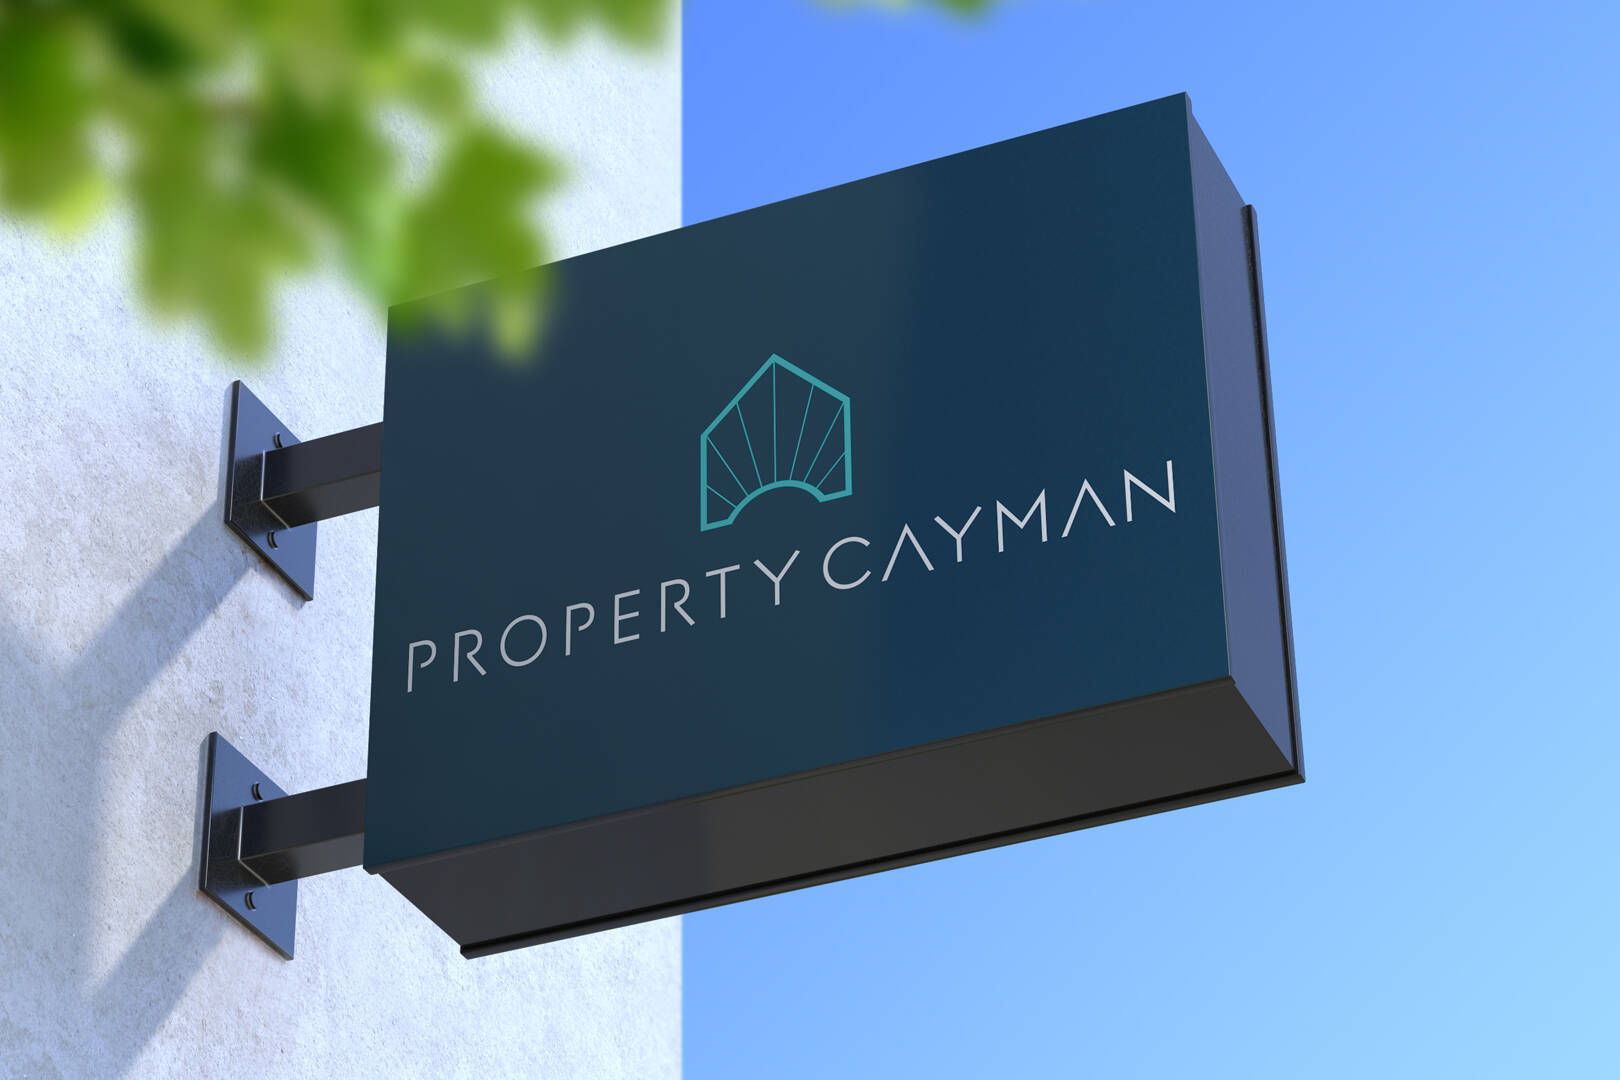 Property Cayman Brand on External Signage